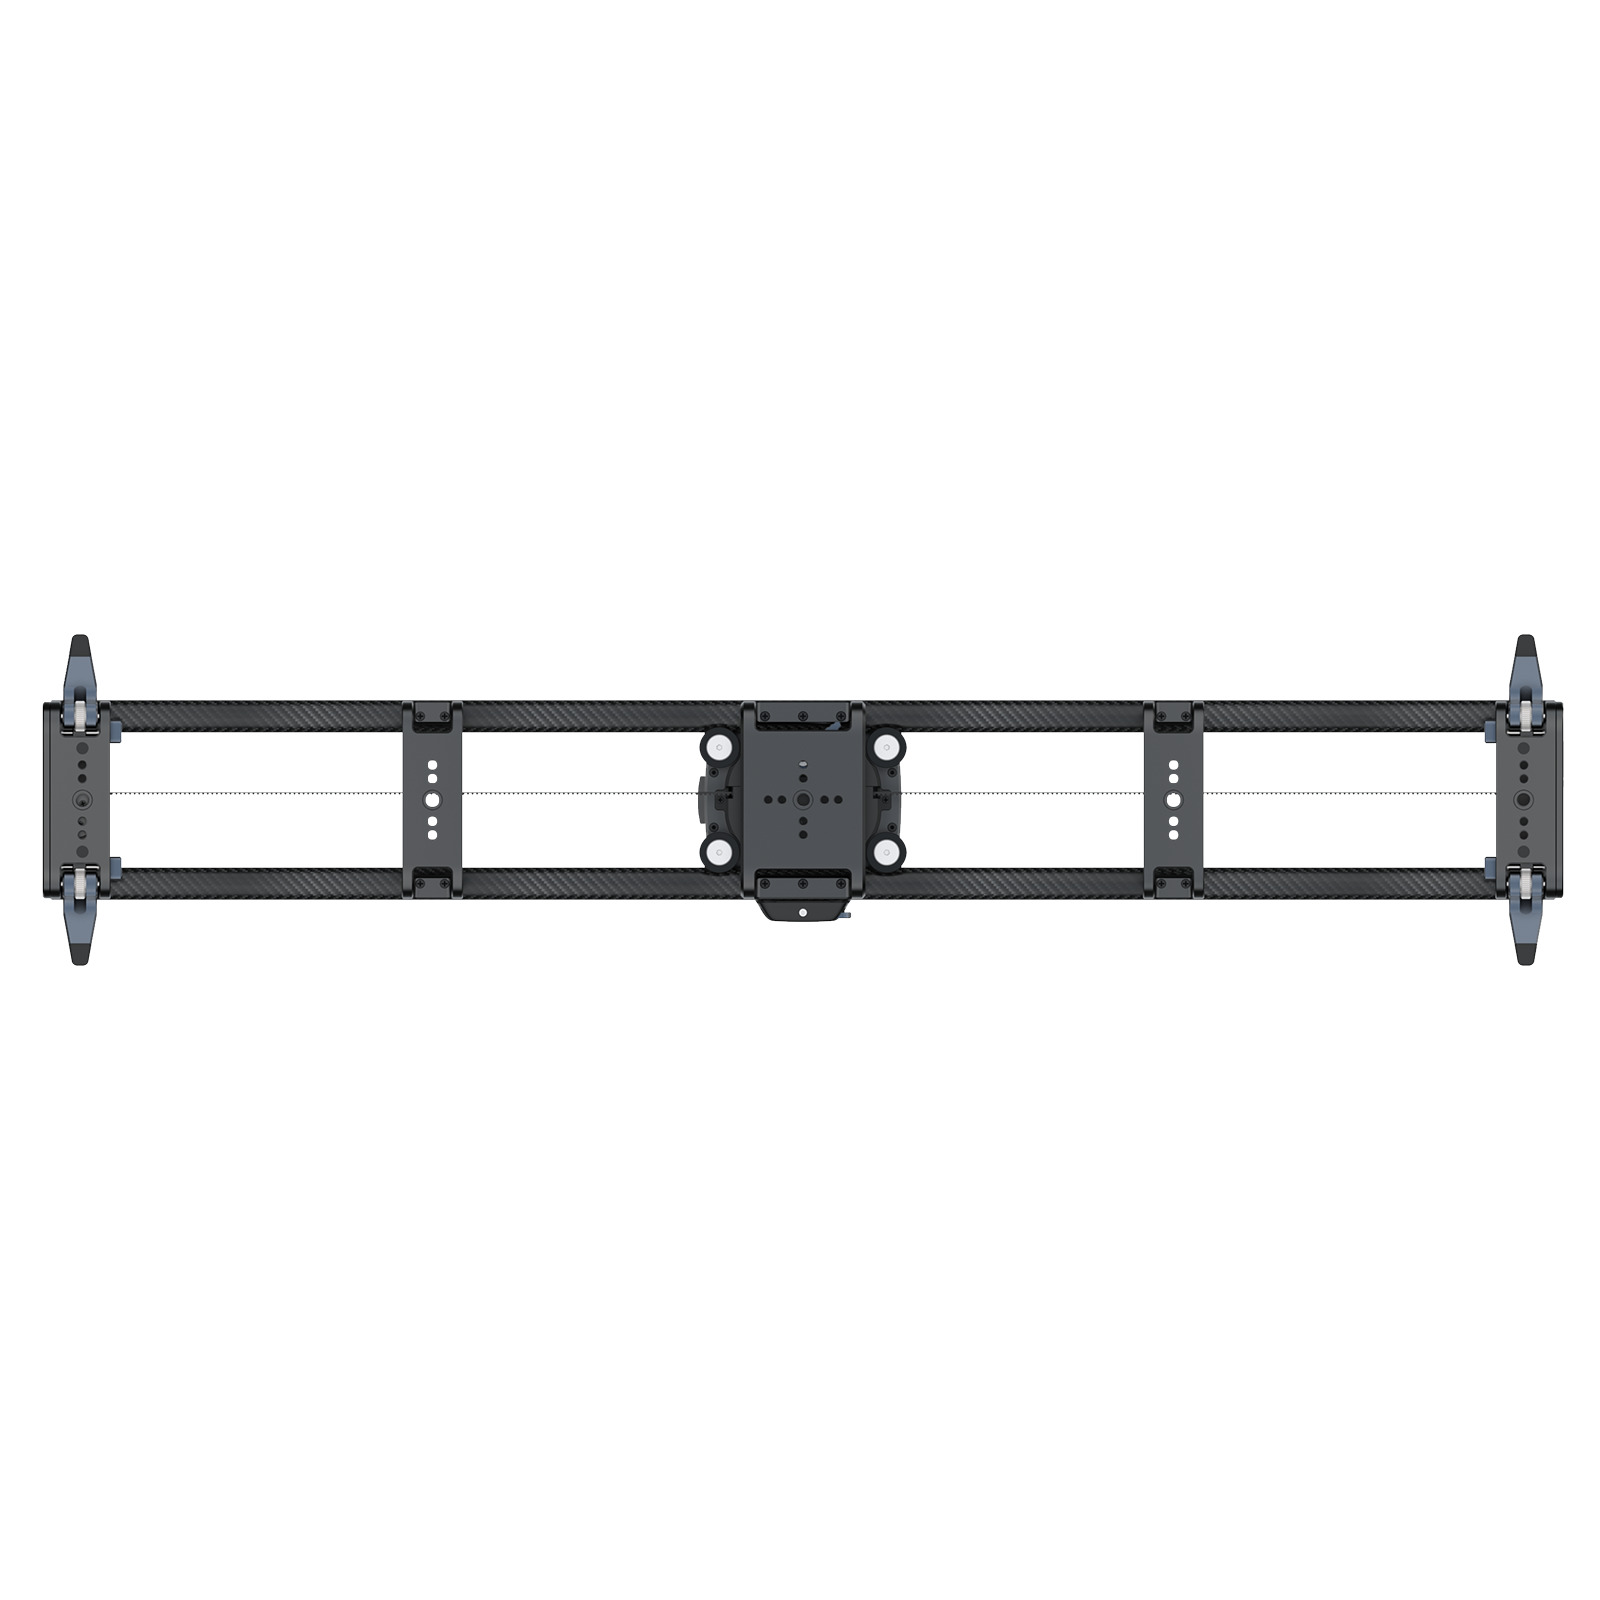 Zeapon AXIS 100 電動雲台付き多軸電動スライダー 最大移動距離100cm LCDスクリーン付きパンヘッド 速度調節 目盛り定規 手動式切り替え可能 デュアル標準ネジ 水平方向12kg 垂直方向約3.5kg 1